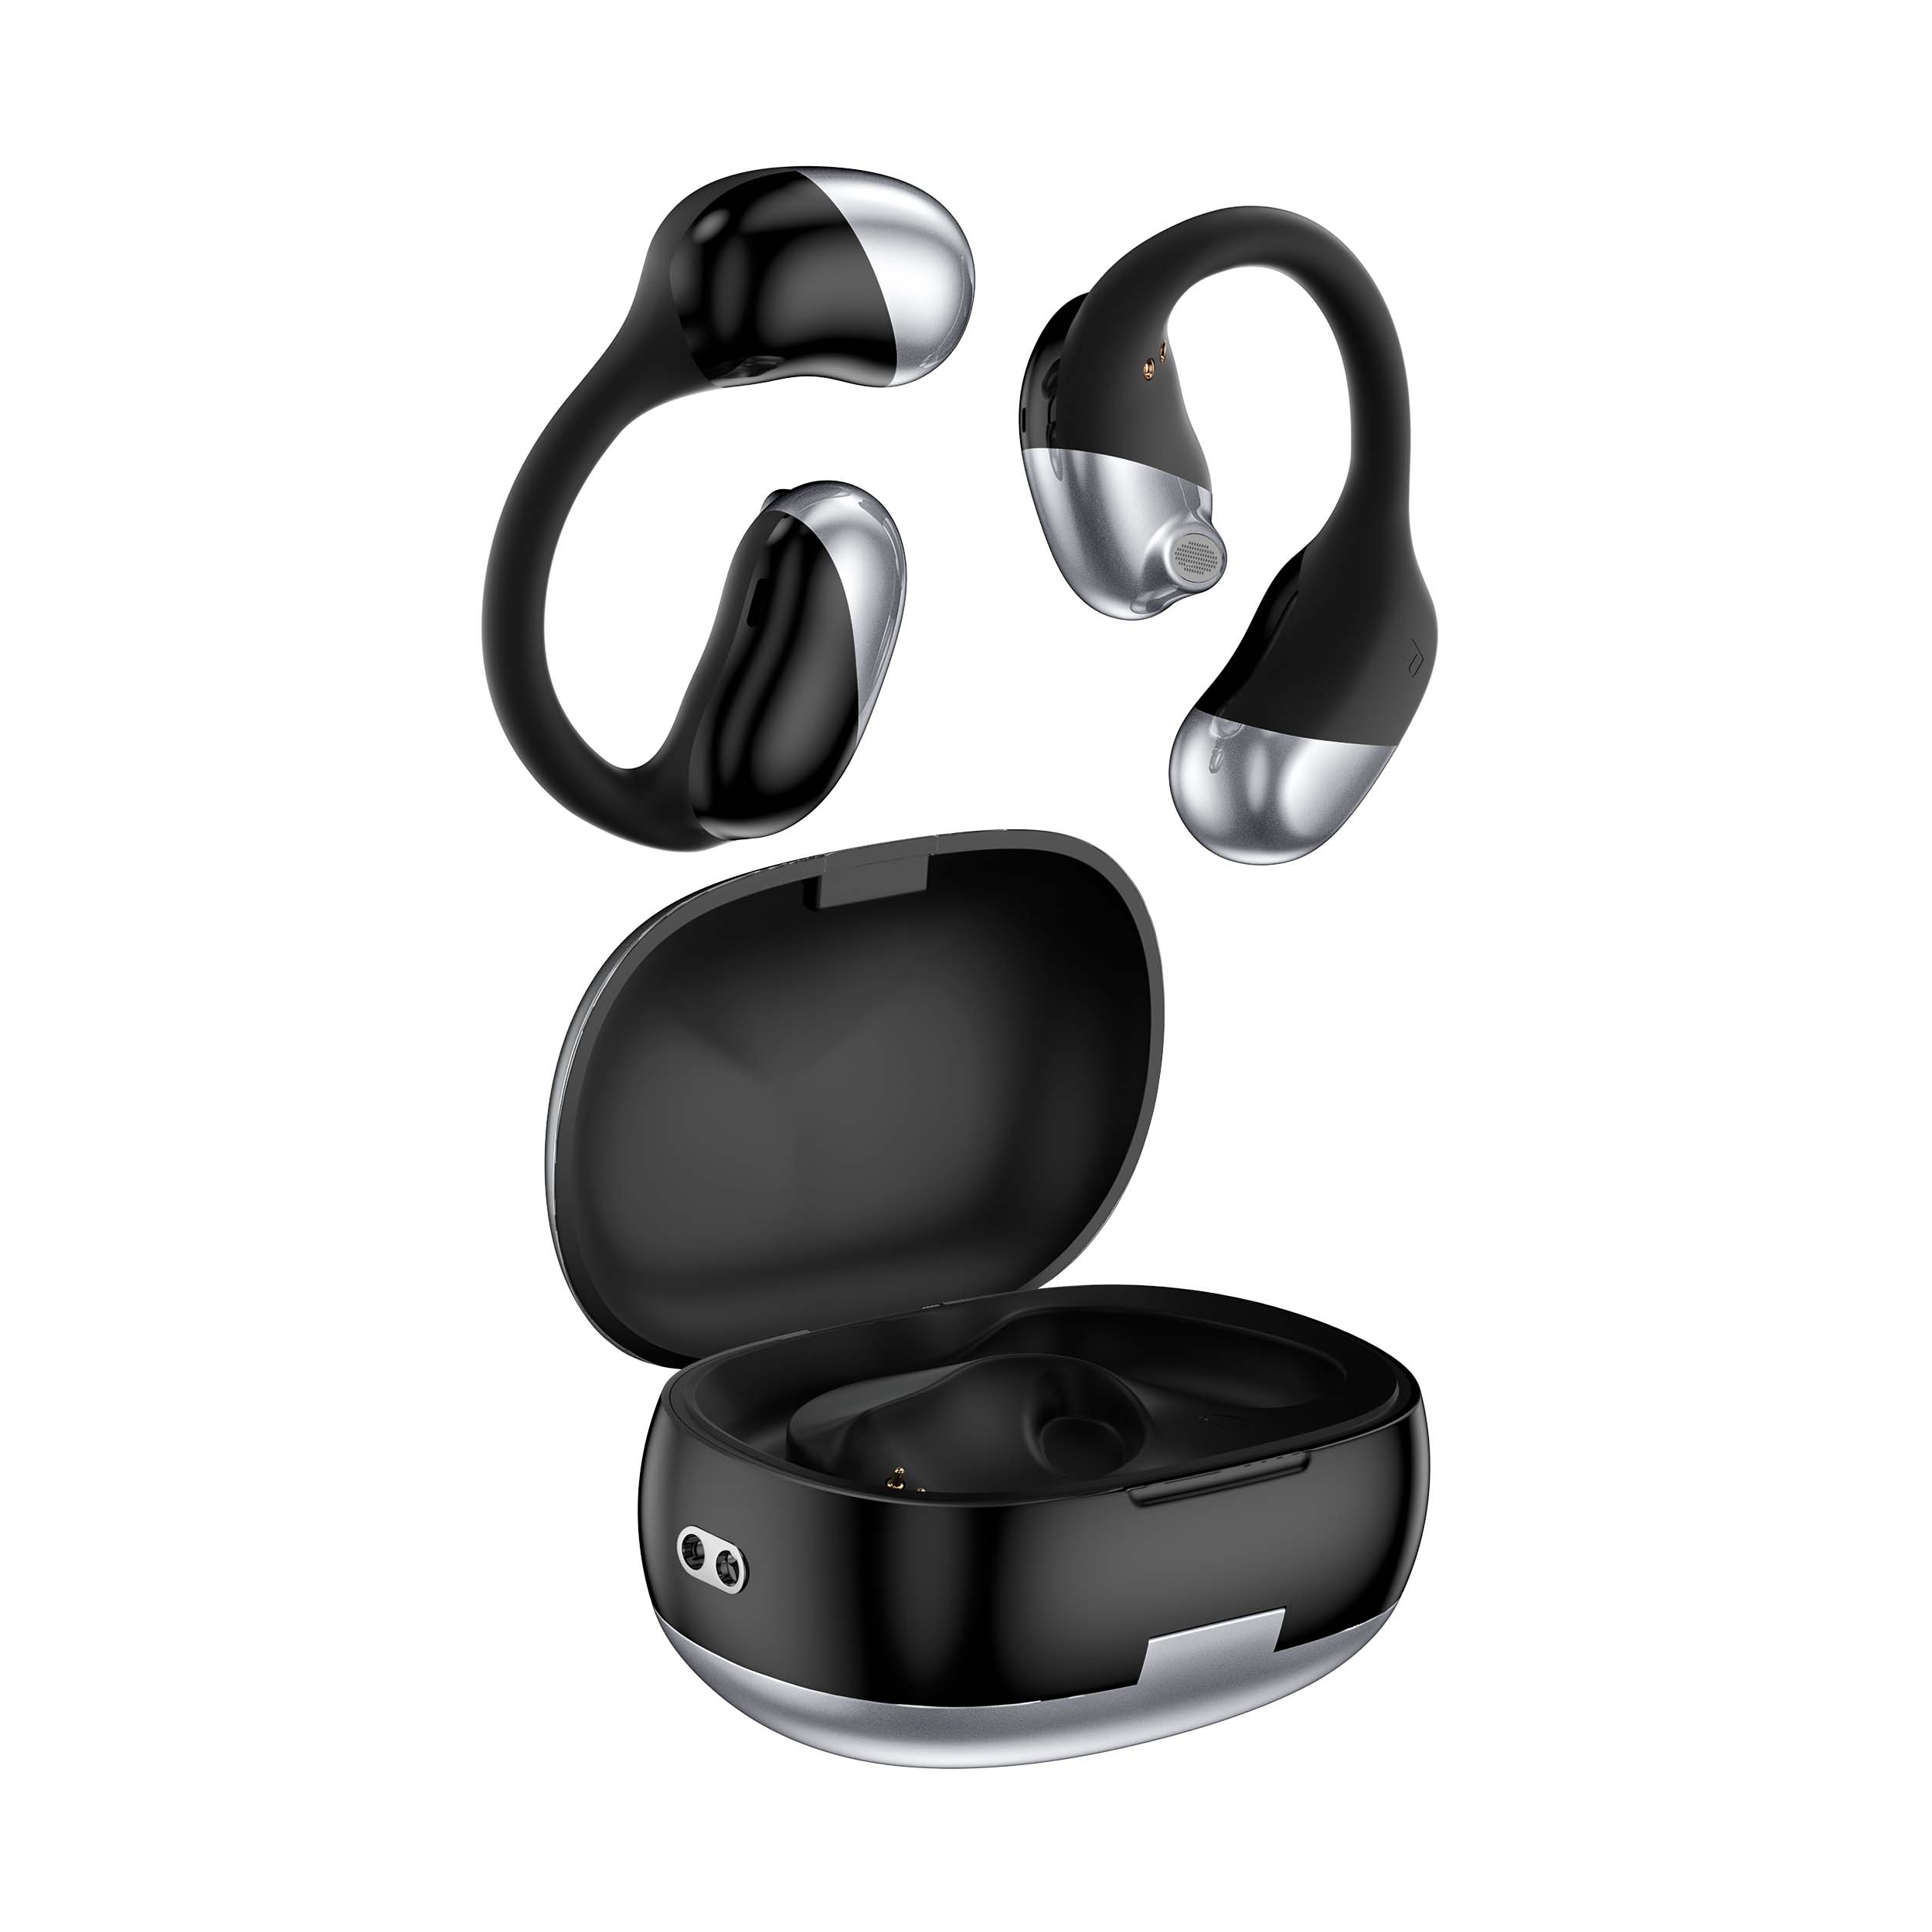 OWS オープン ワイヤレス Bluetooth ヘッドフォン、スピーカー付き、卸売価格 Bluetooth ヘッドフォン